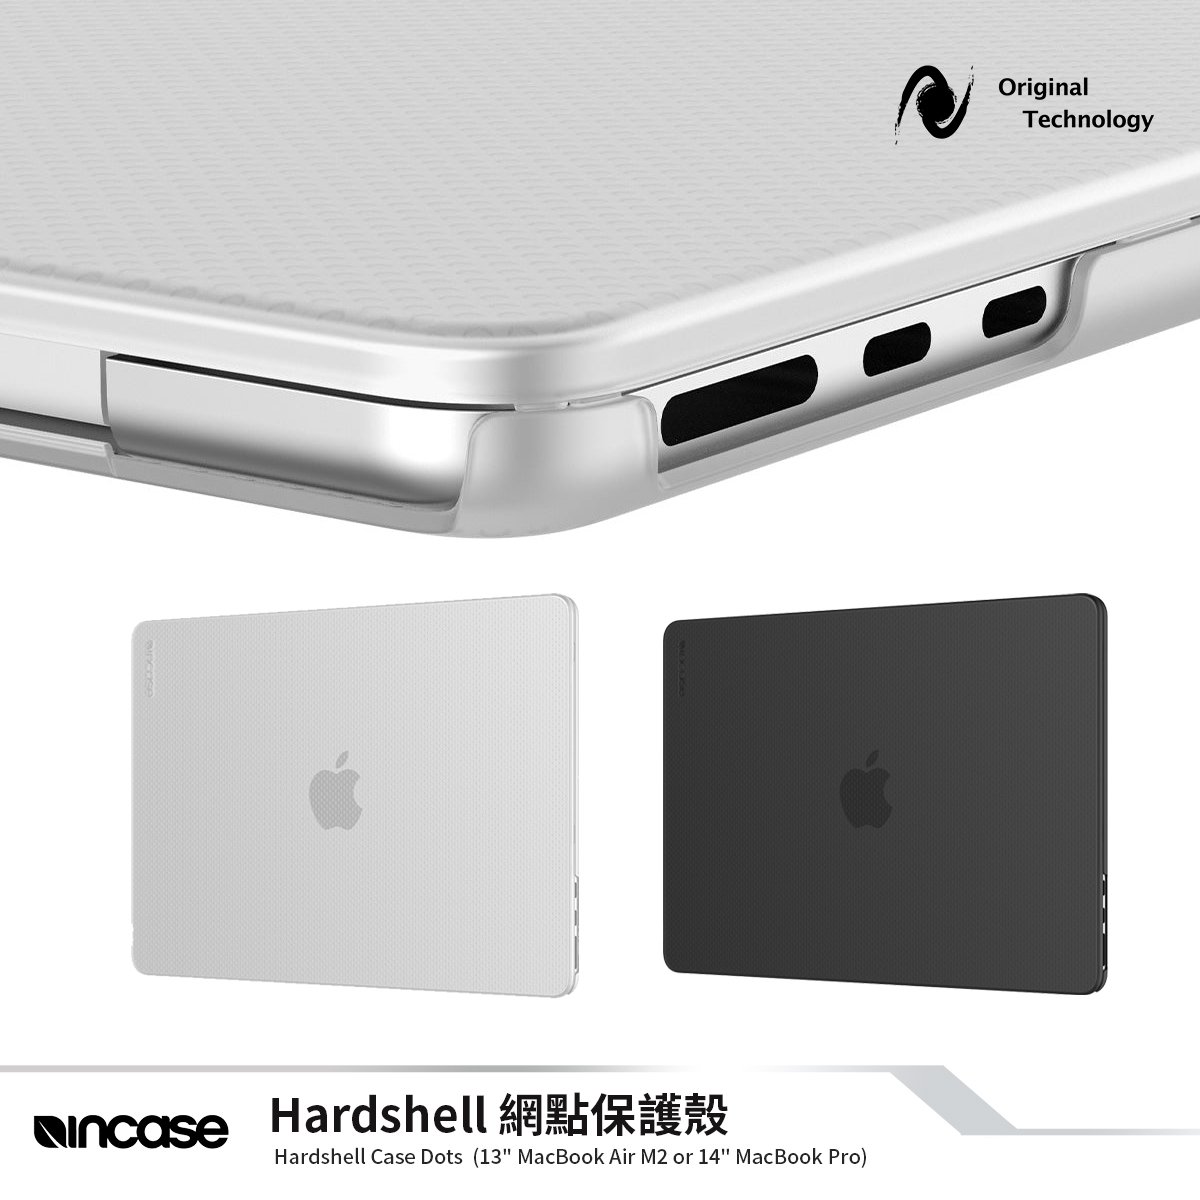 Incase Hardshell Case Dots - 專為 MacBook Pro 而設💻